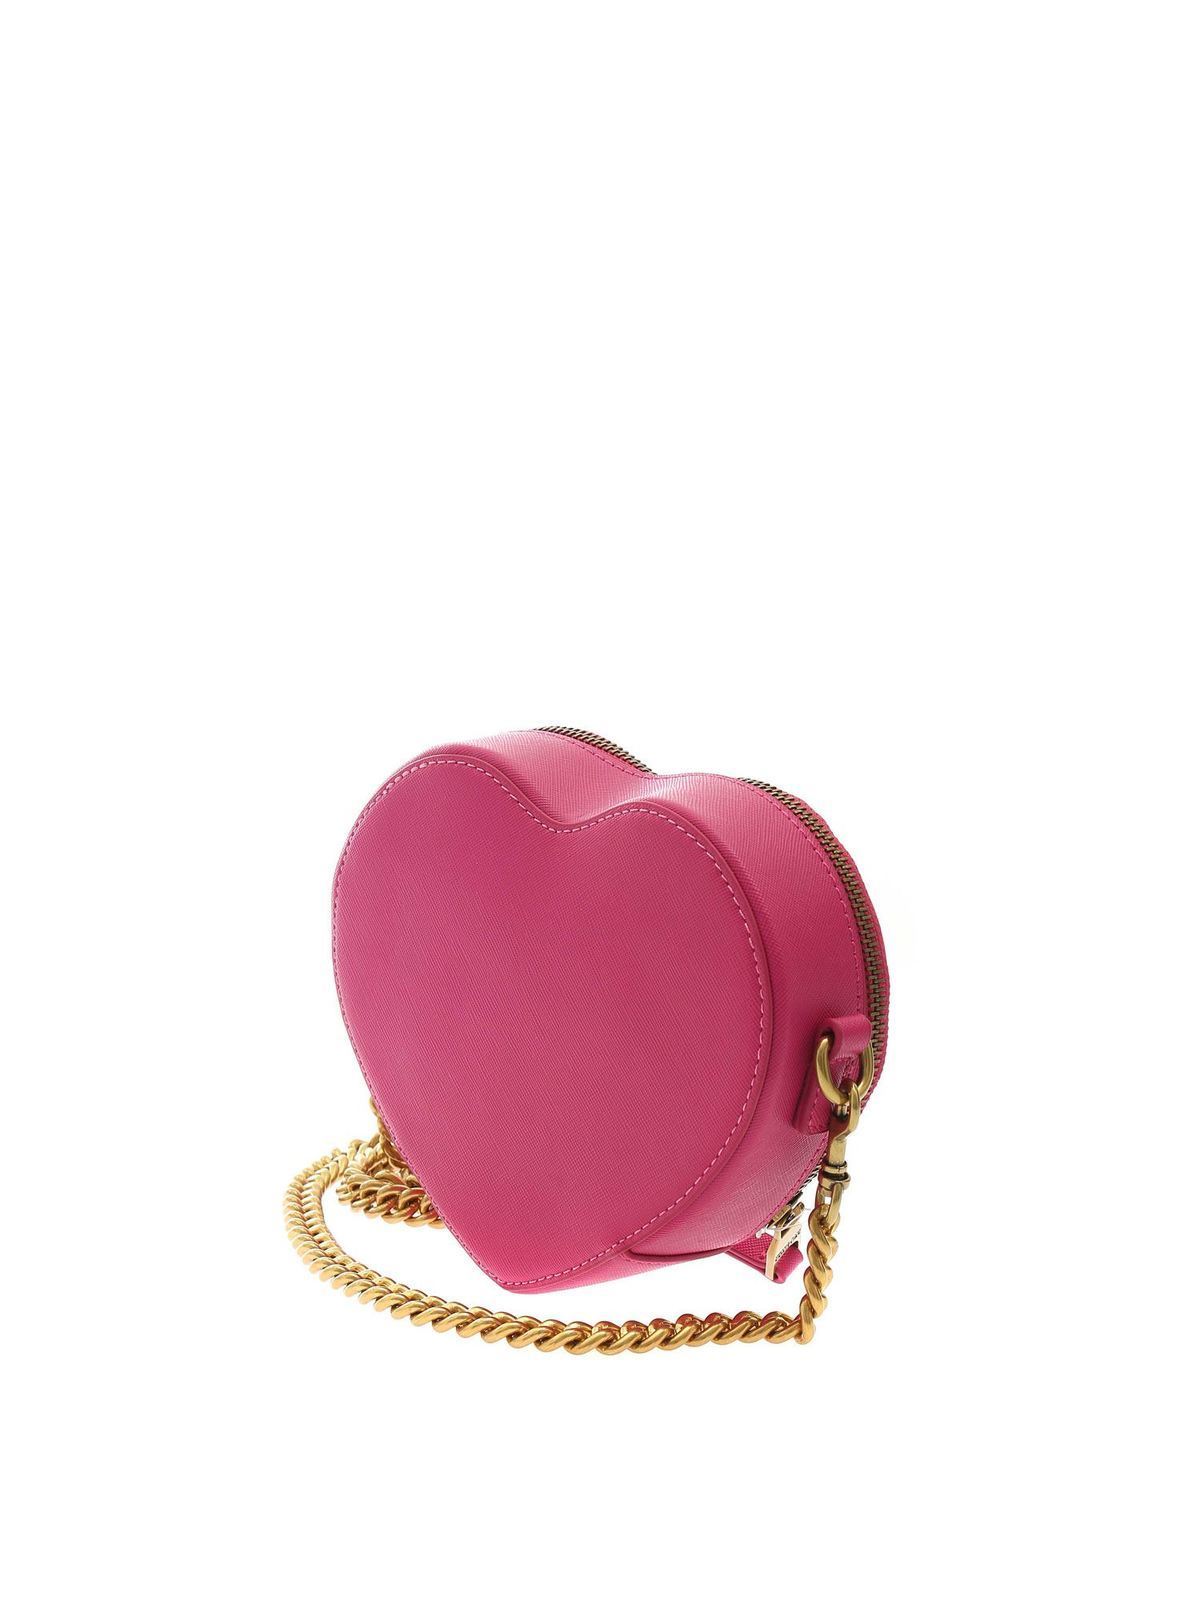 Versace Jeans Couture Heart Lock Crossbody Bag - Farfetch